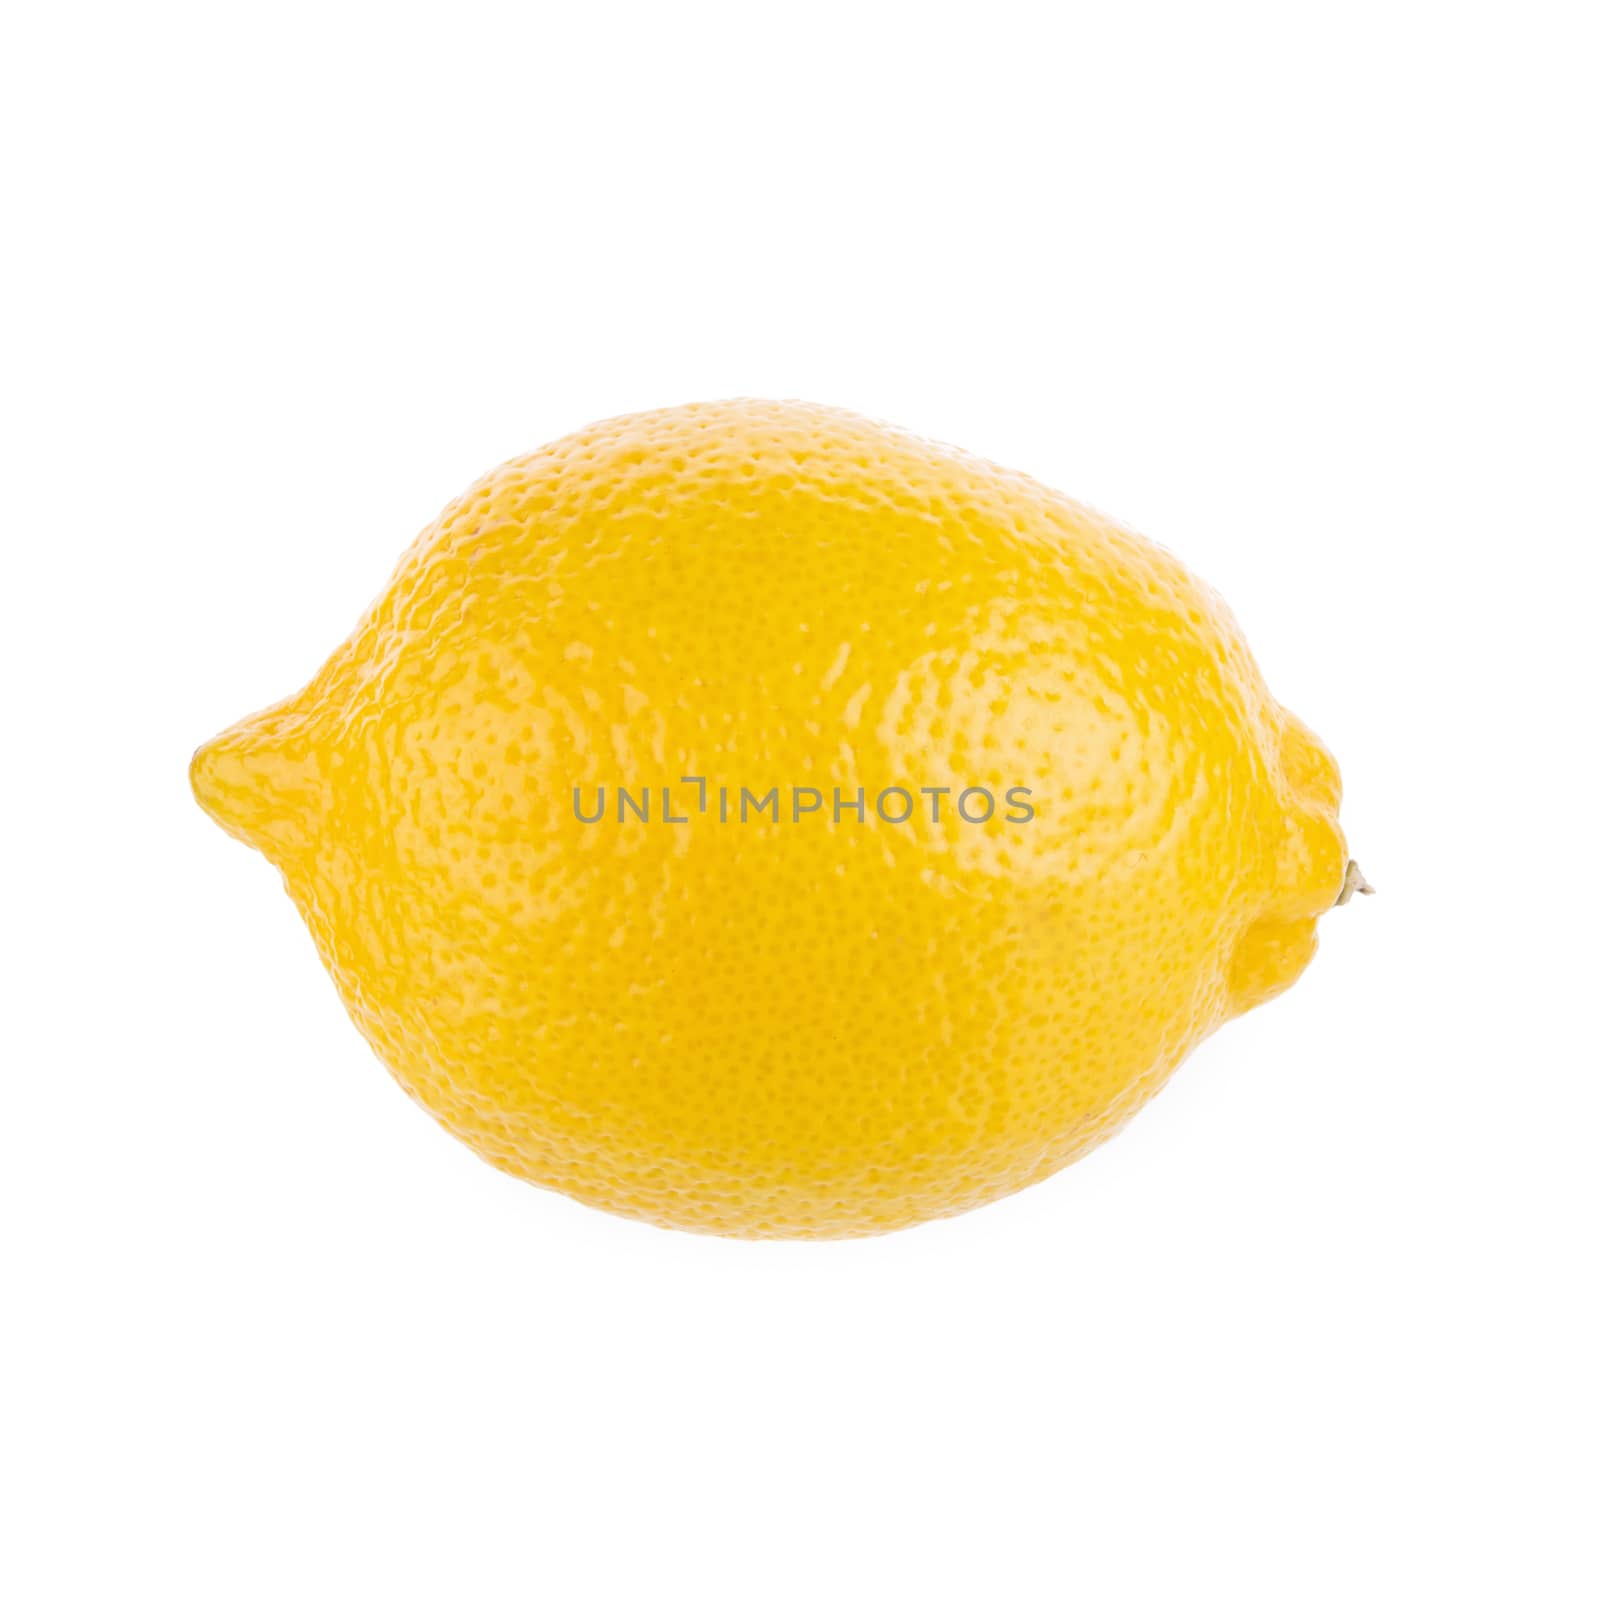 yellow lemon isolated on over white background.